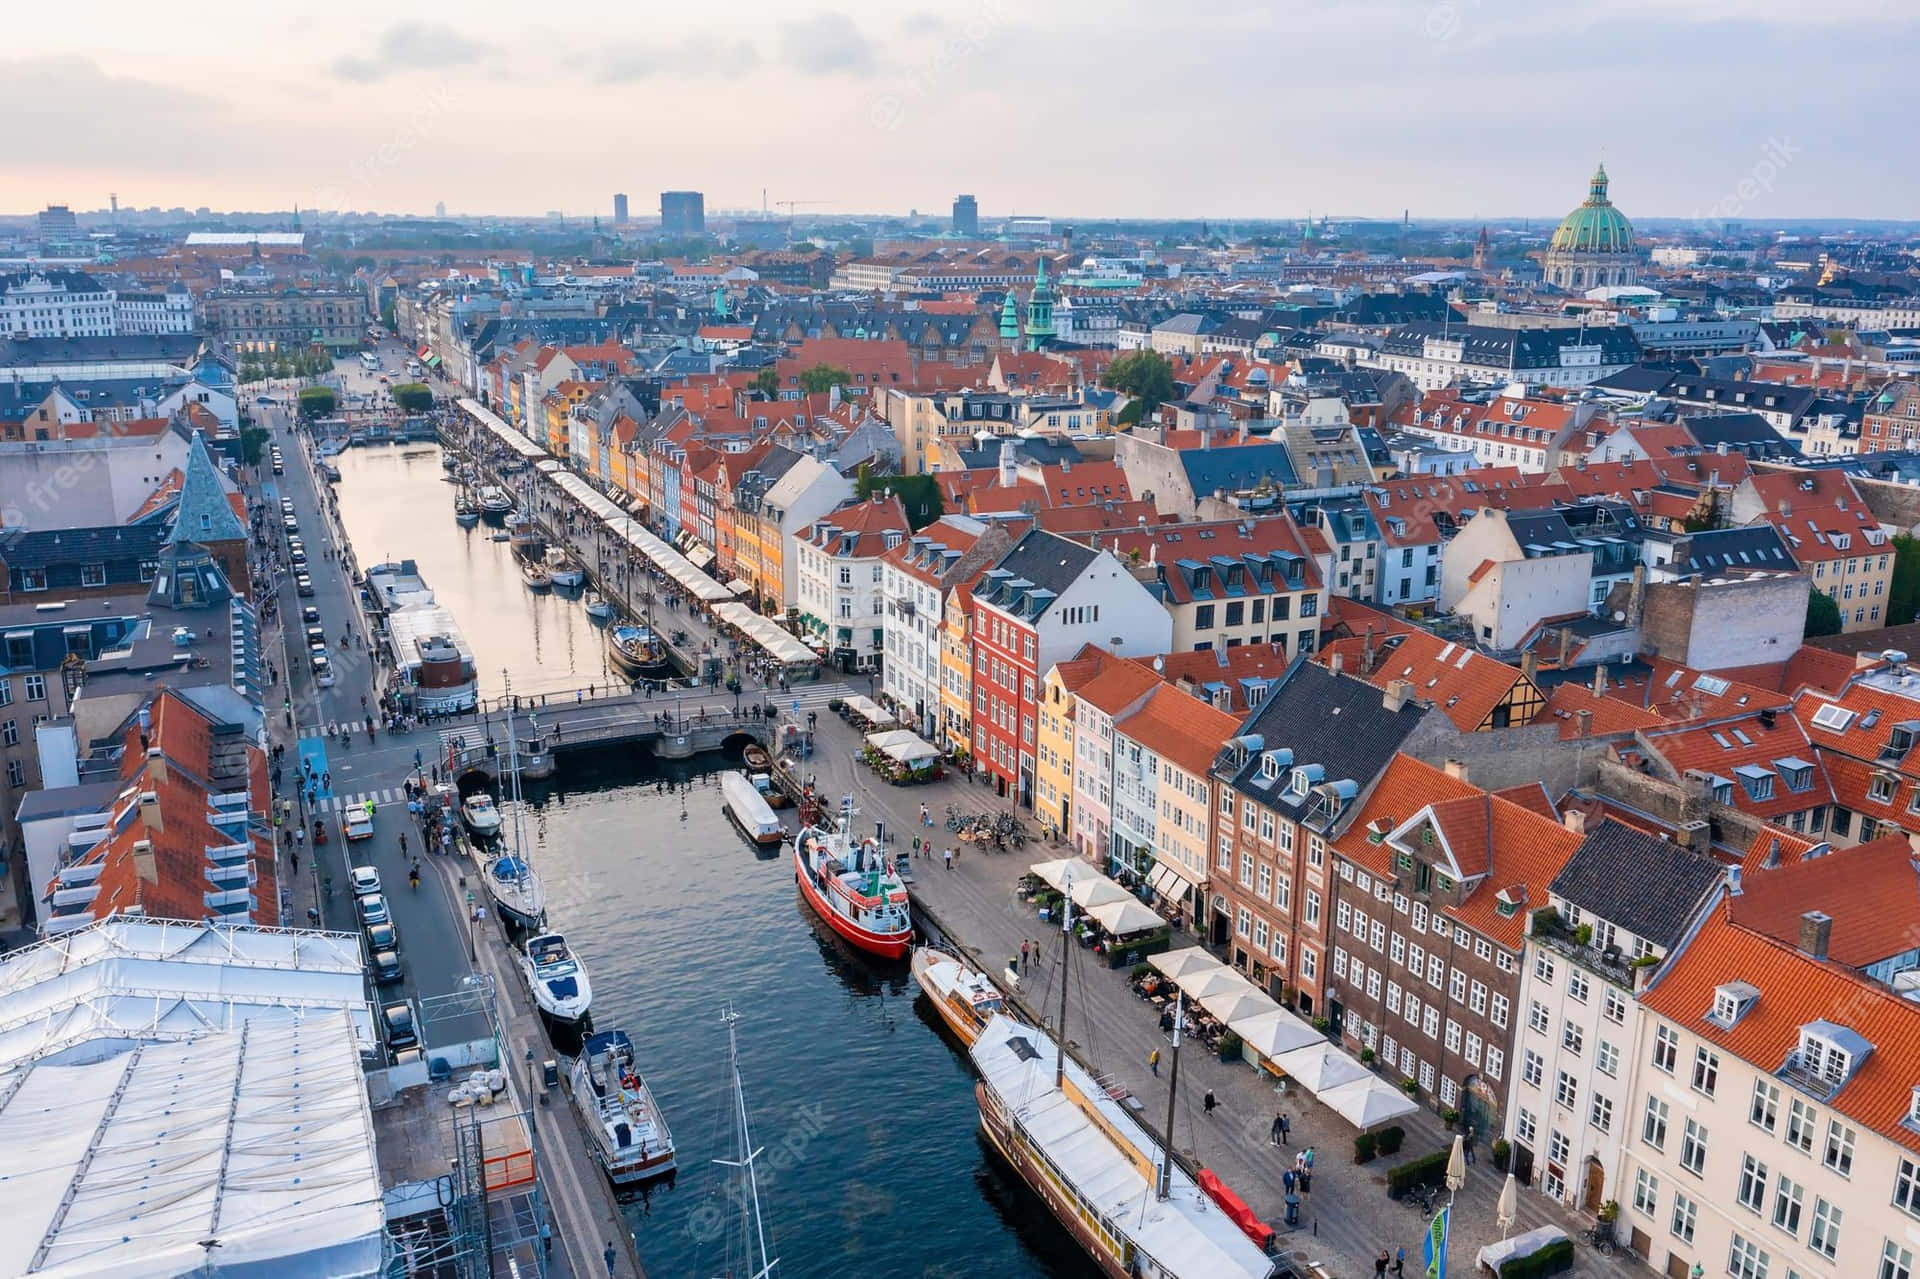 Download Nyhavn Port Aerial View Wallpaper | Wallpapers.com